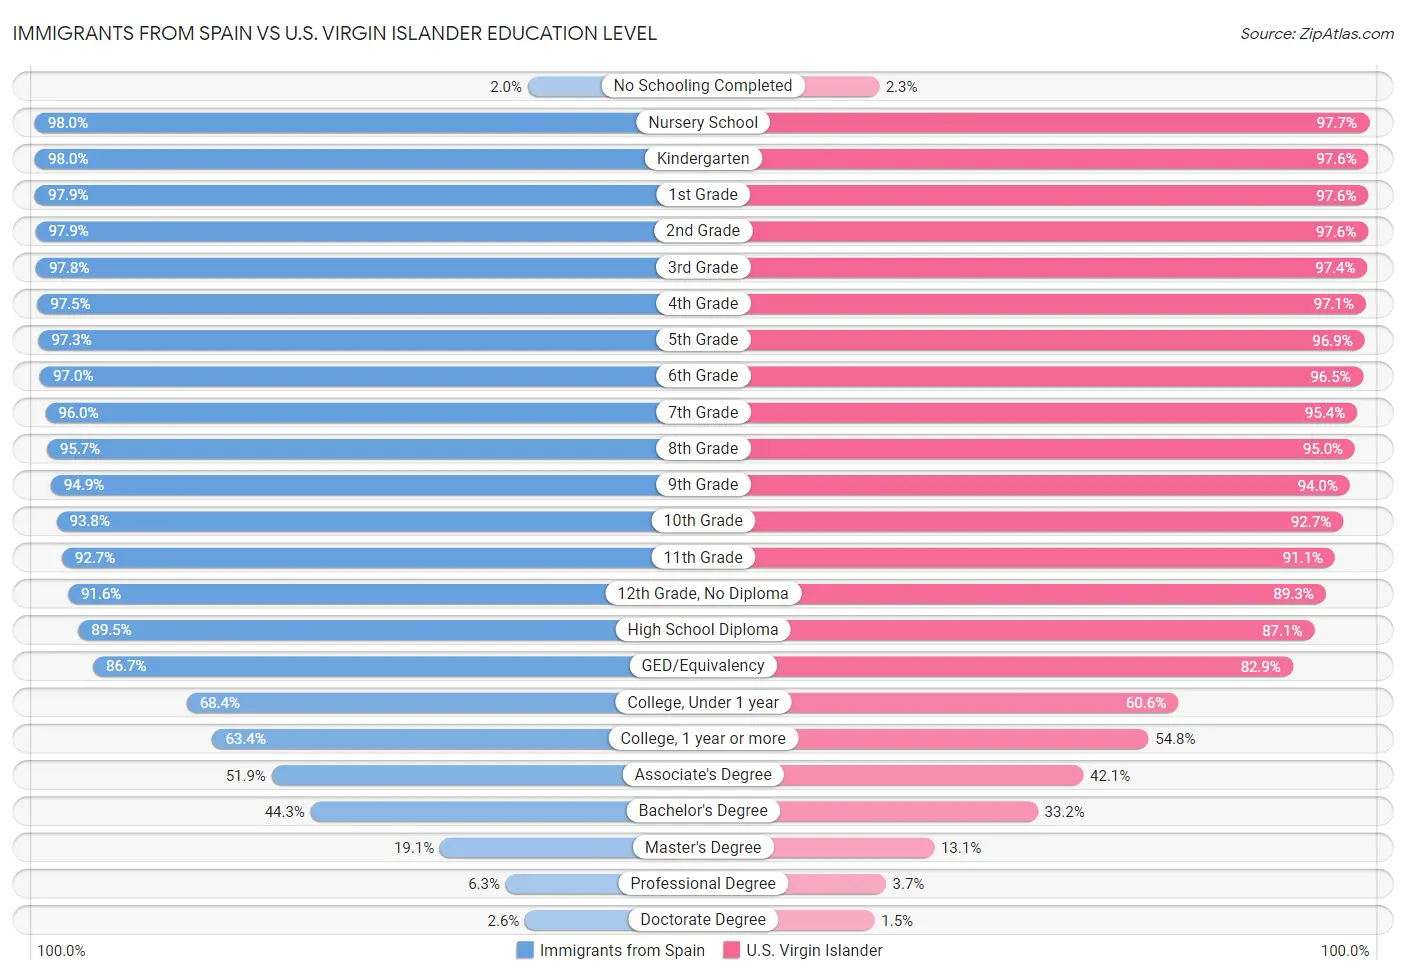 Immigrants from Spain vs U.S. Virgin Islander Education Level